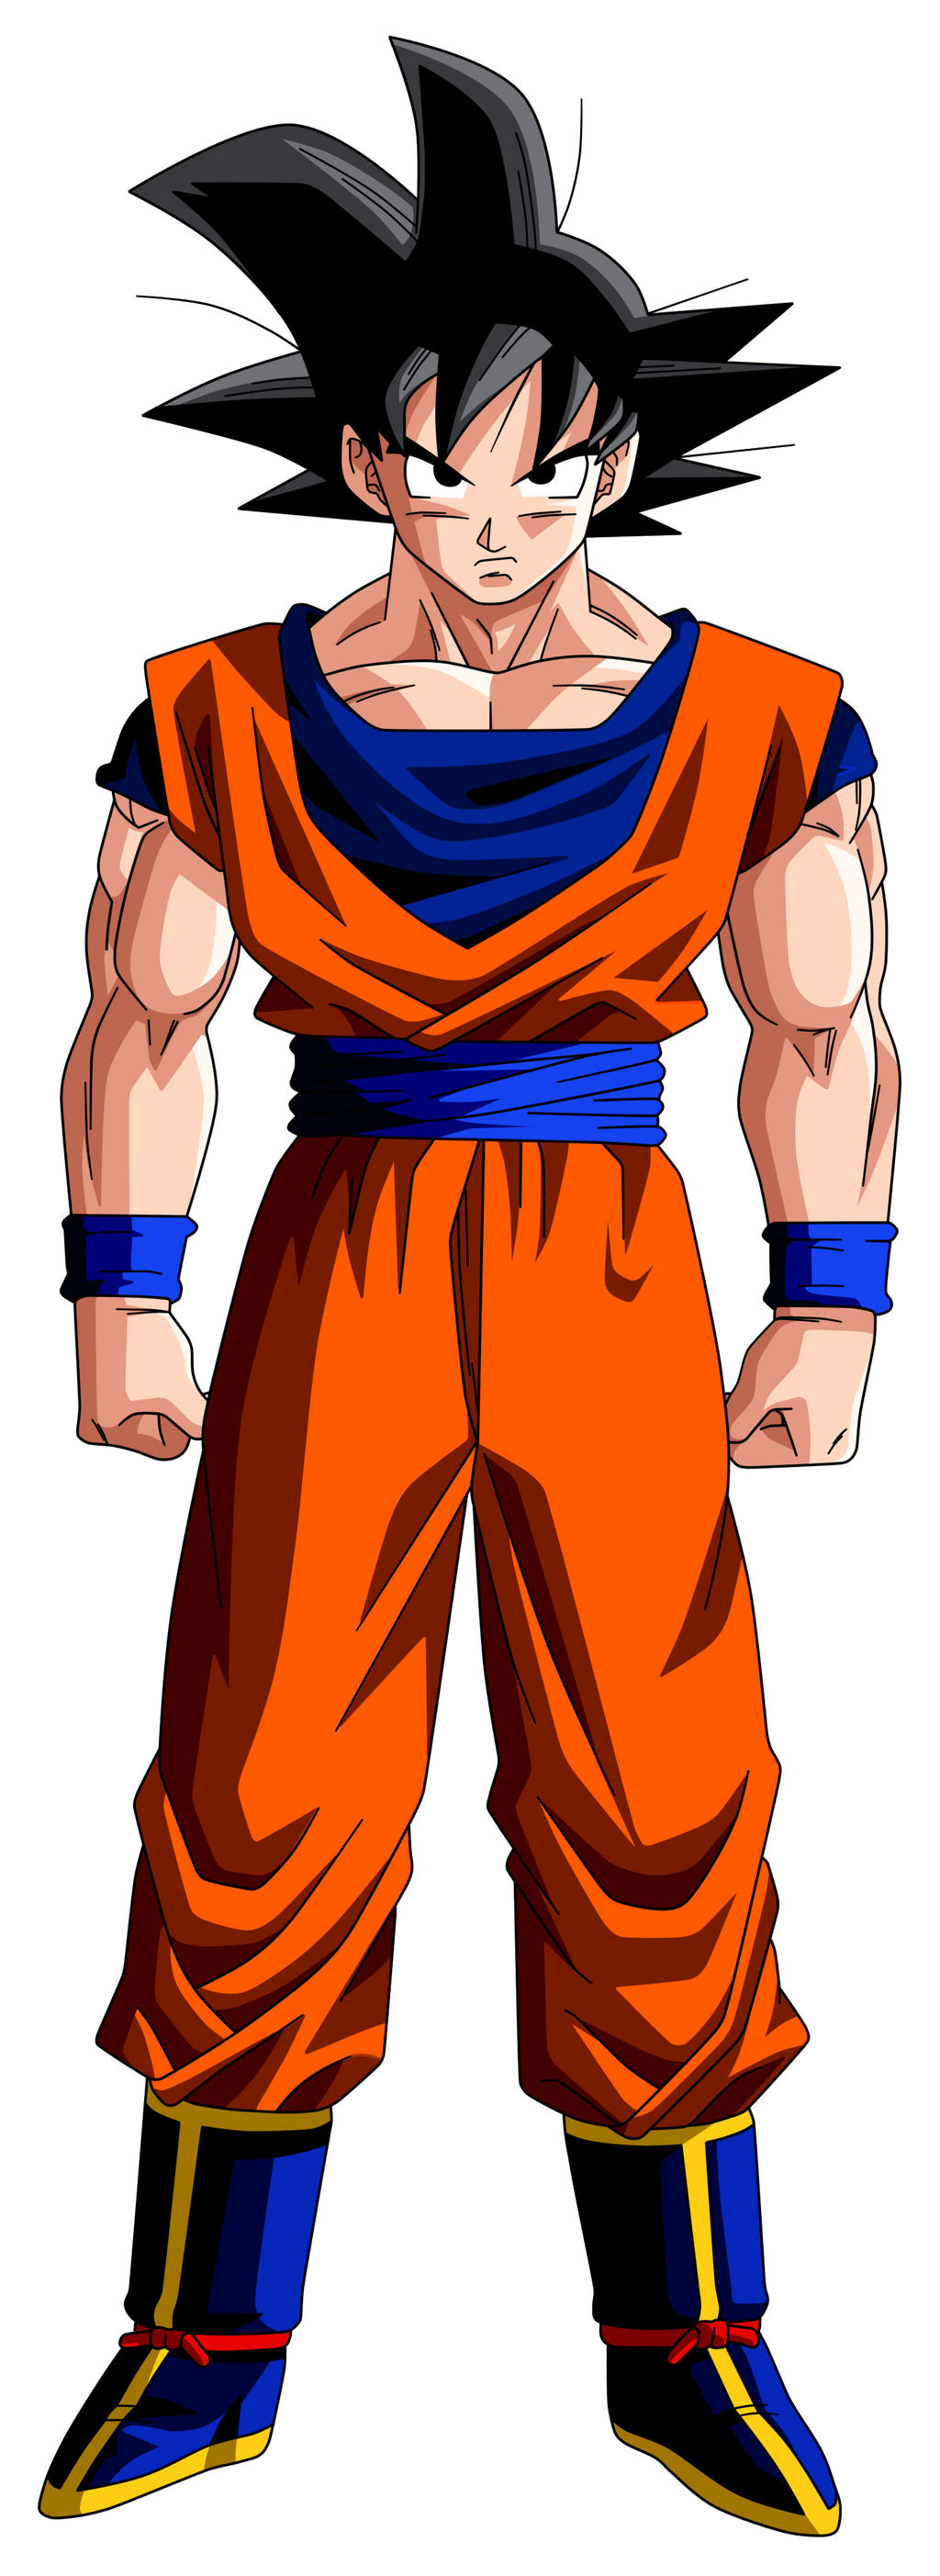 Goku Character Biography